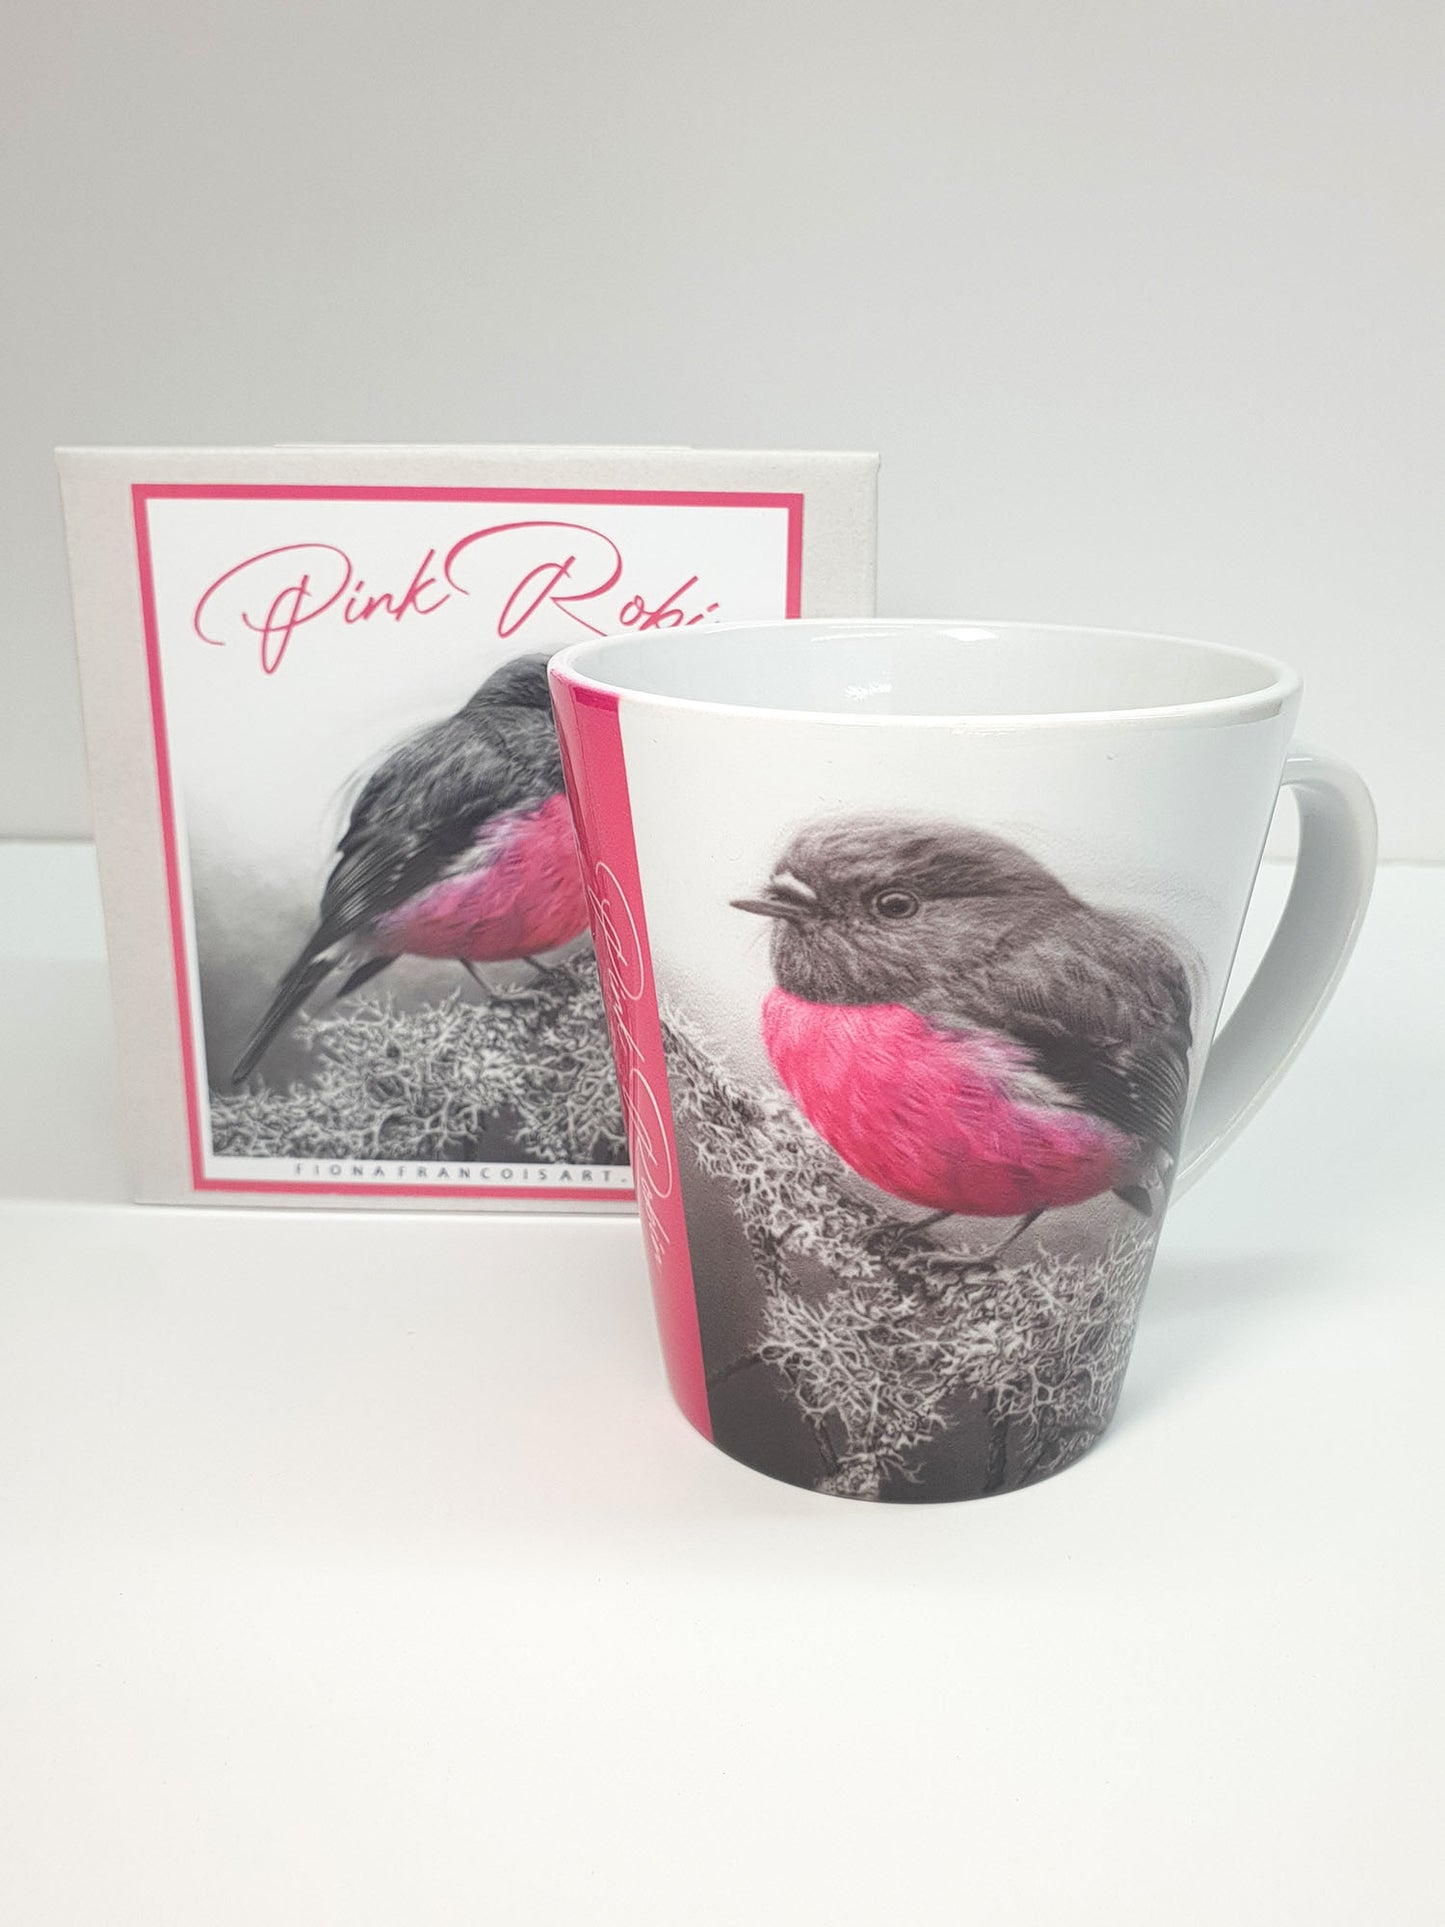 'Pink Robin' ceramic mug